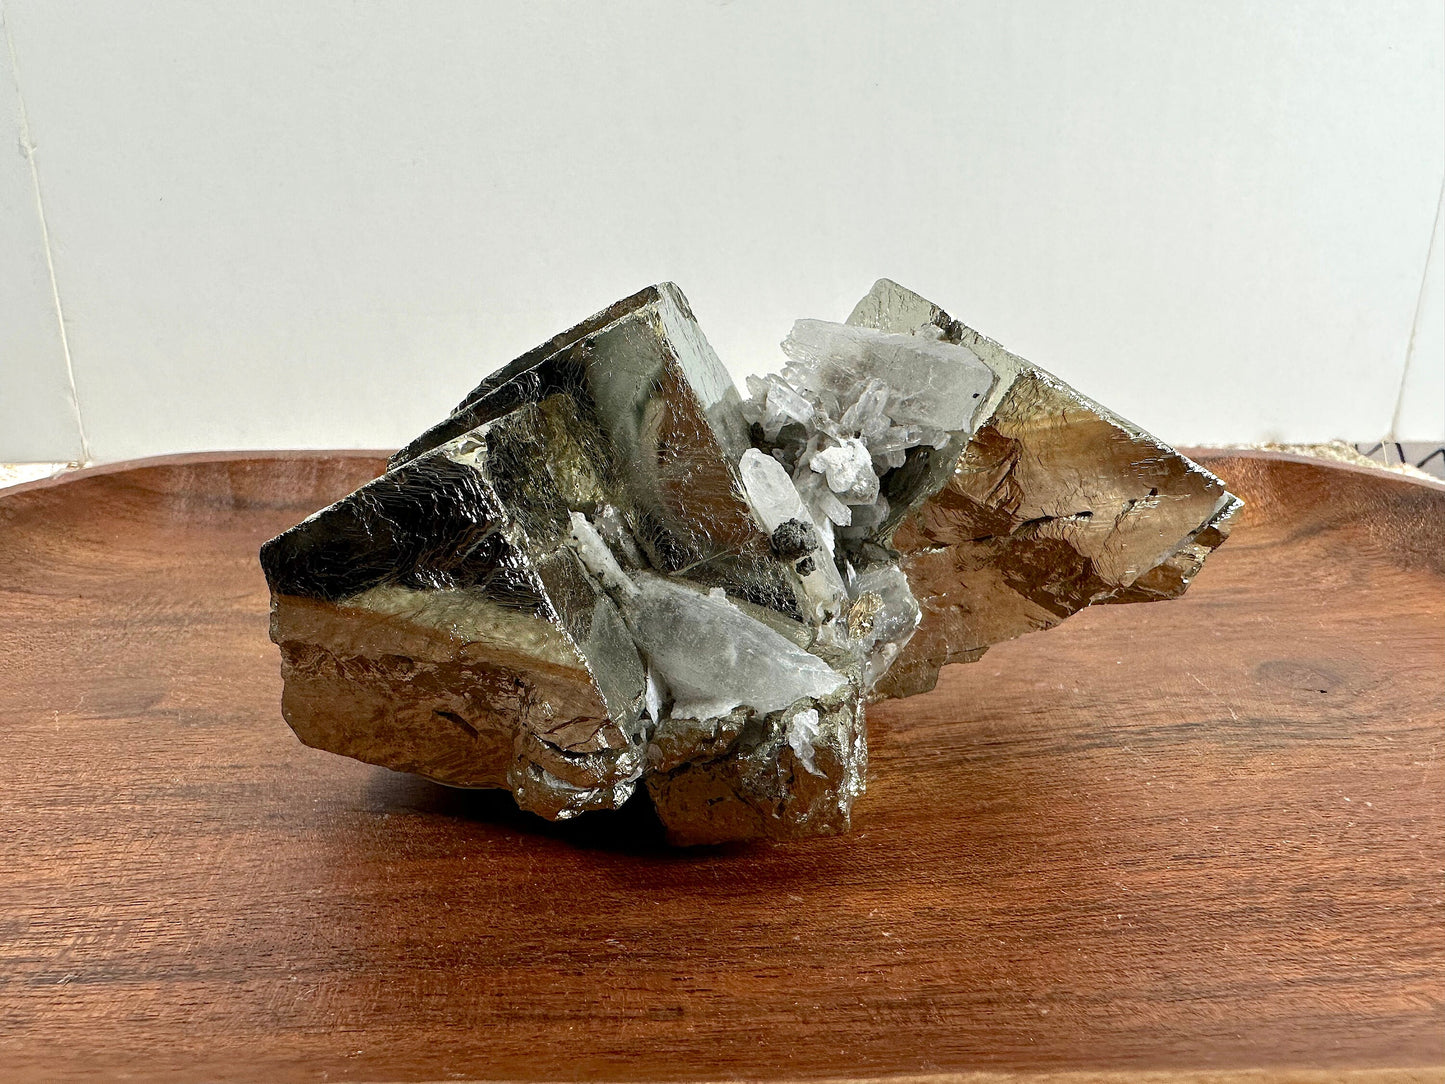 Cubic Pyrite and Clear Quartz Cluster 1.48 lb . Collector item